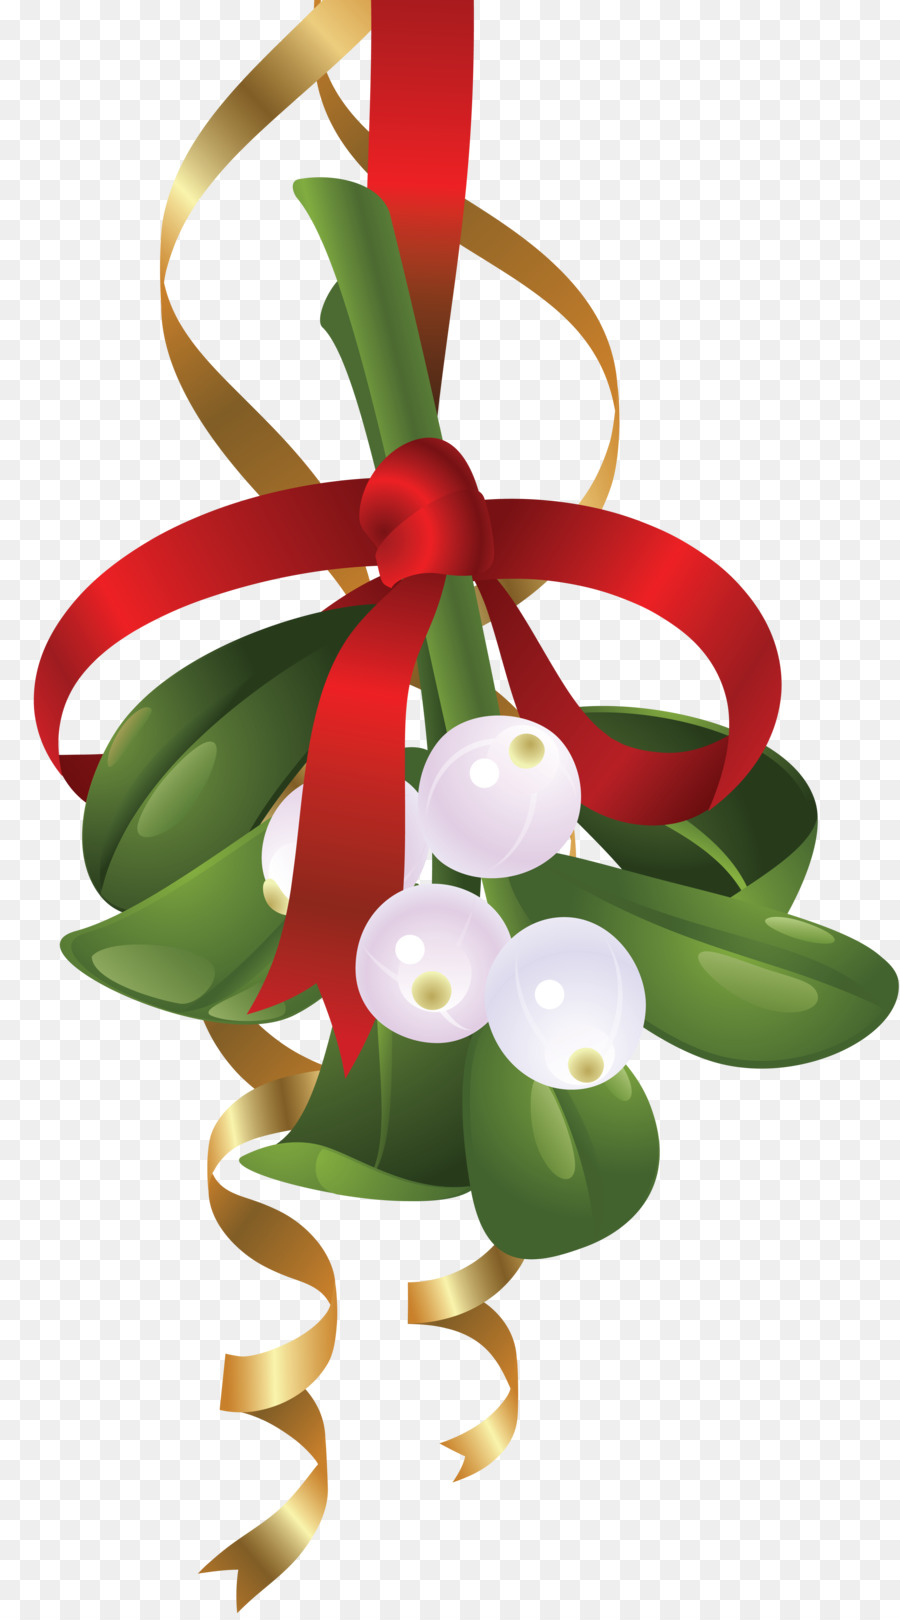 Mistletoe Portable Network Graphics Clip art Illustration Image - canada day celebration ribbon png christmas png download - 3493*6262 - Free Transparent Mistletoe png Download.